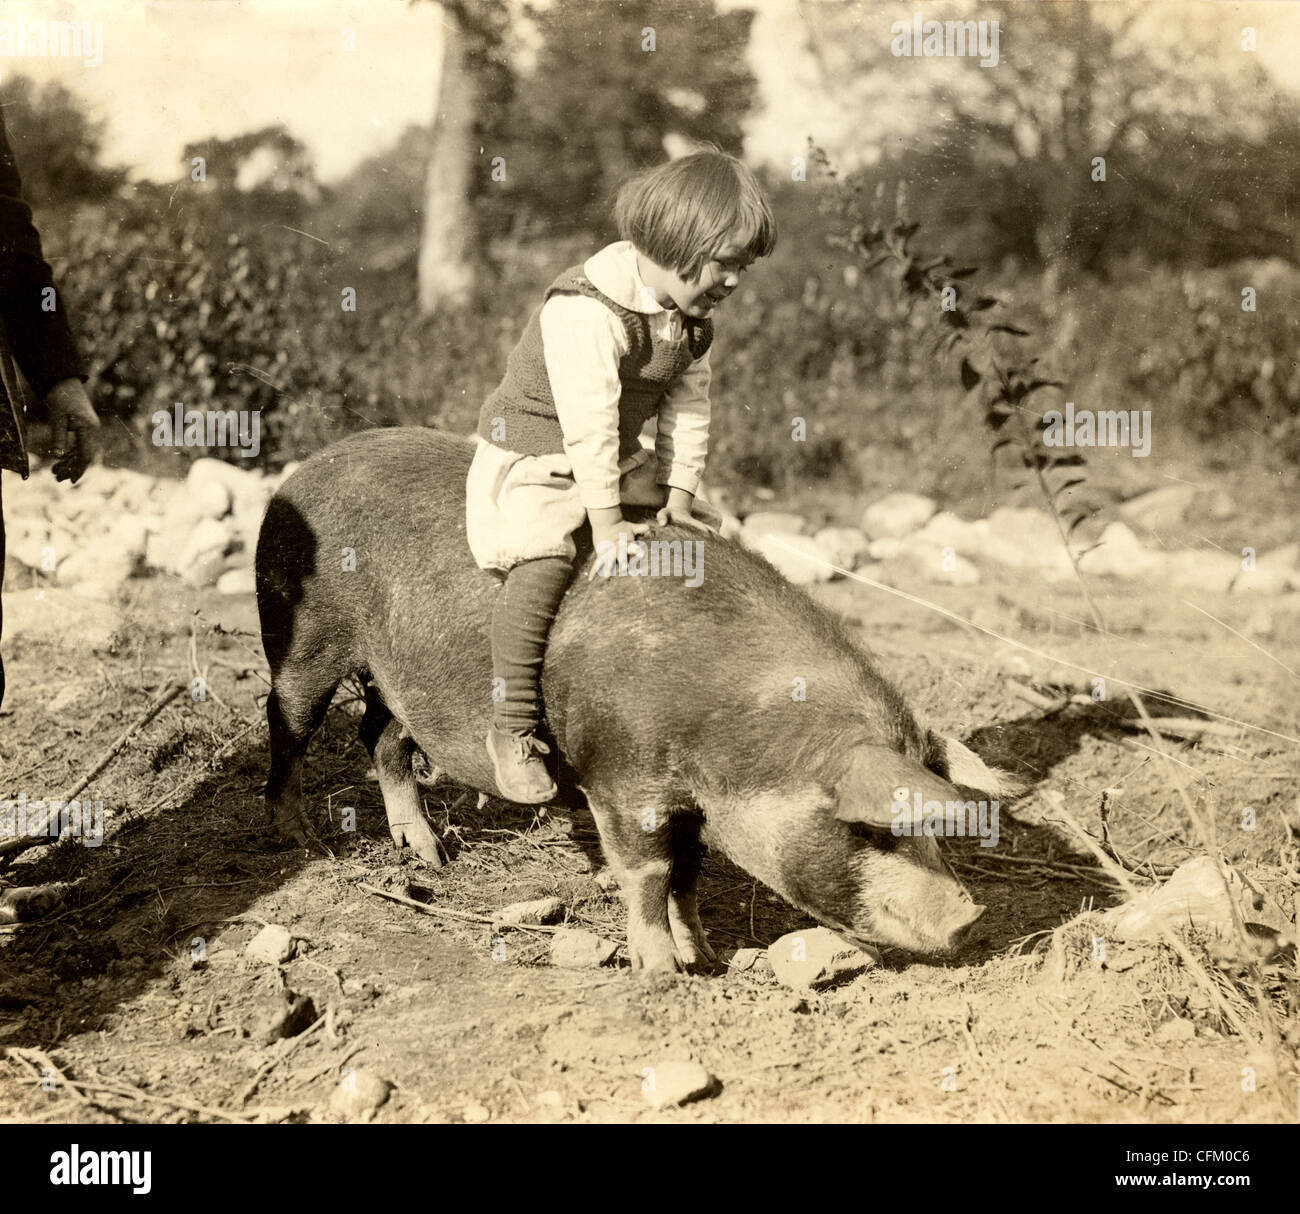 Little Girl Riding Atop a Pig Stock Photo